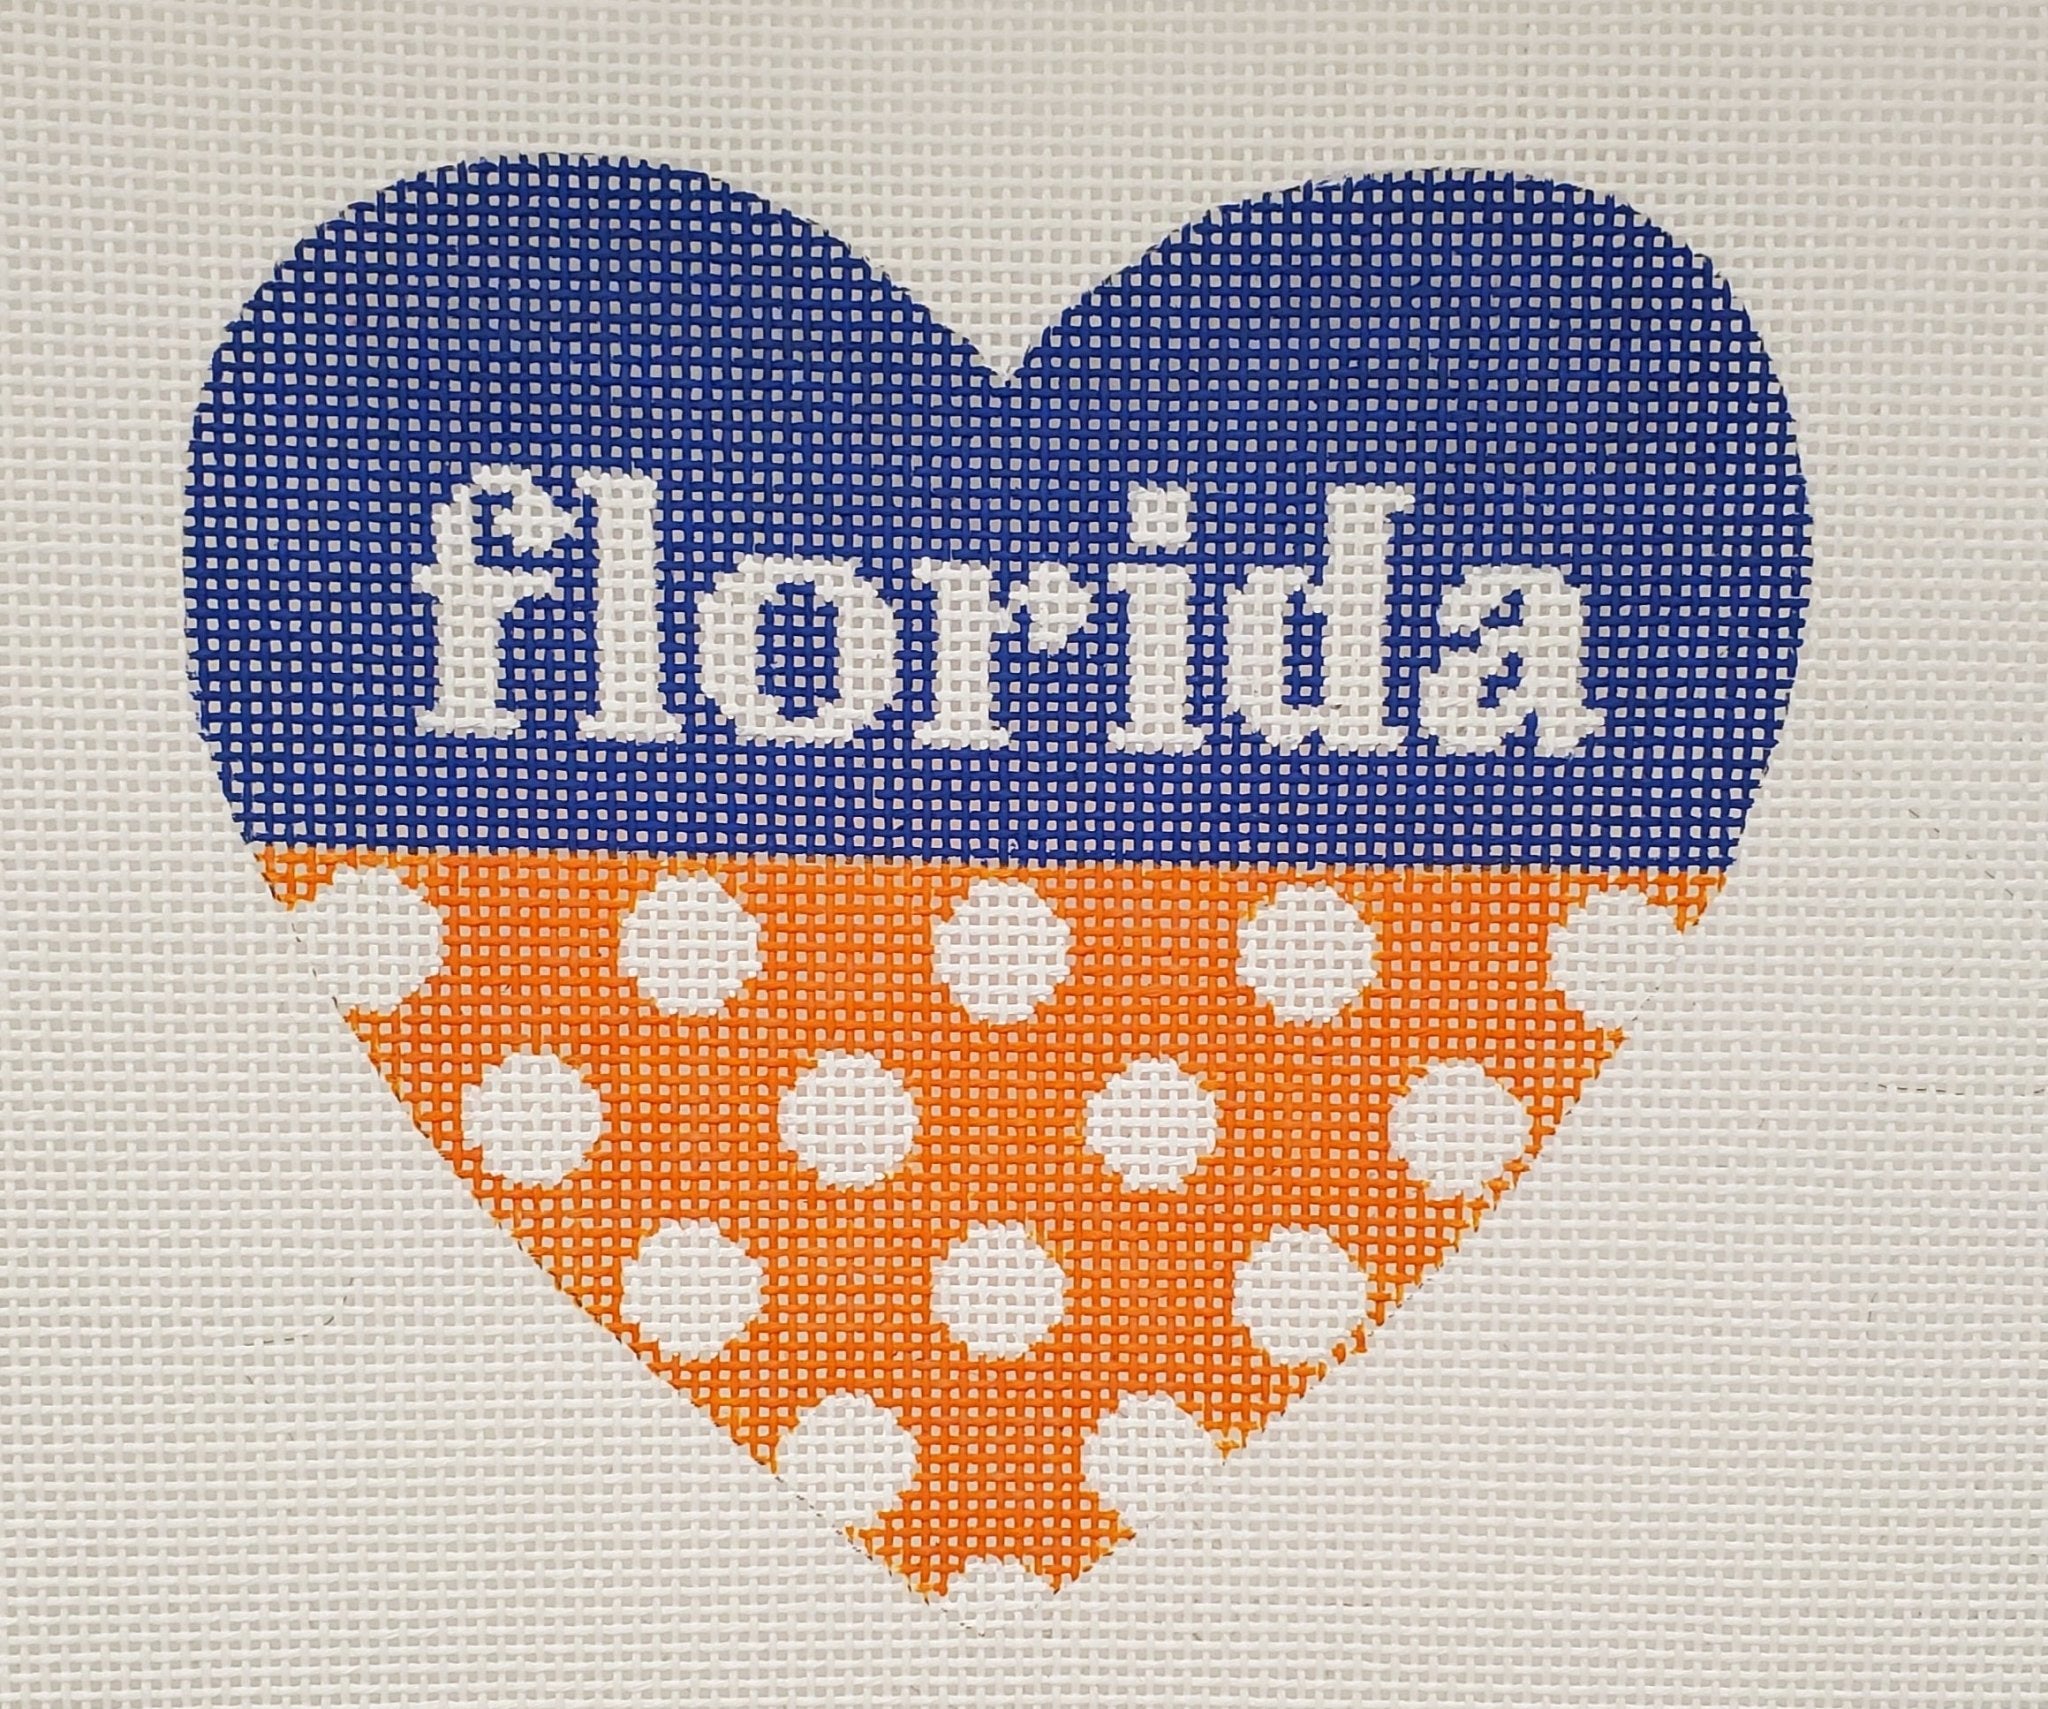 Florida Heart - The Flying Needles